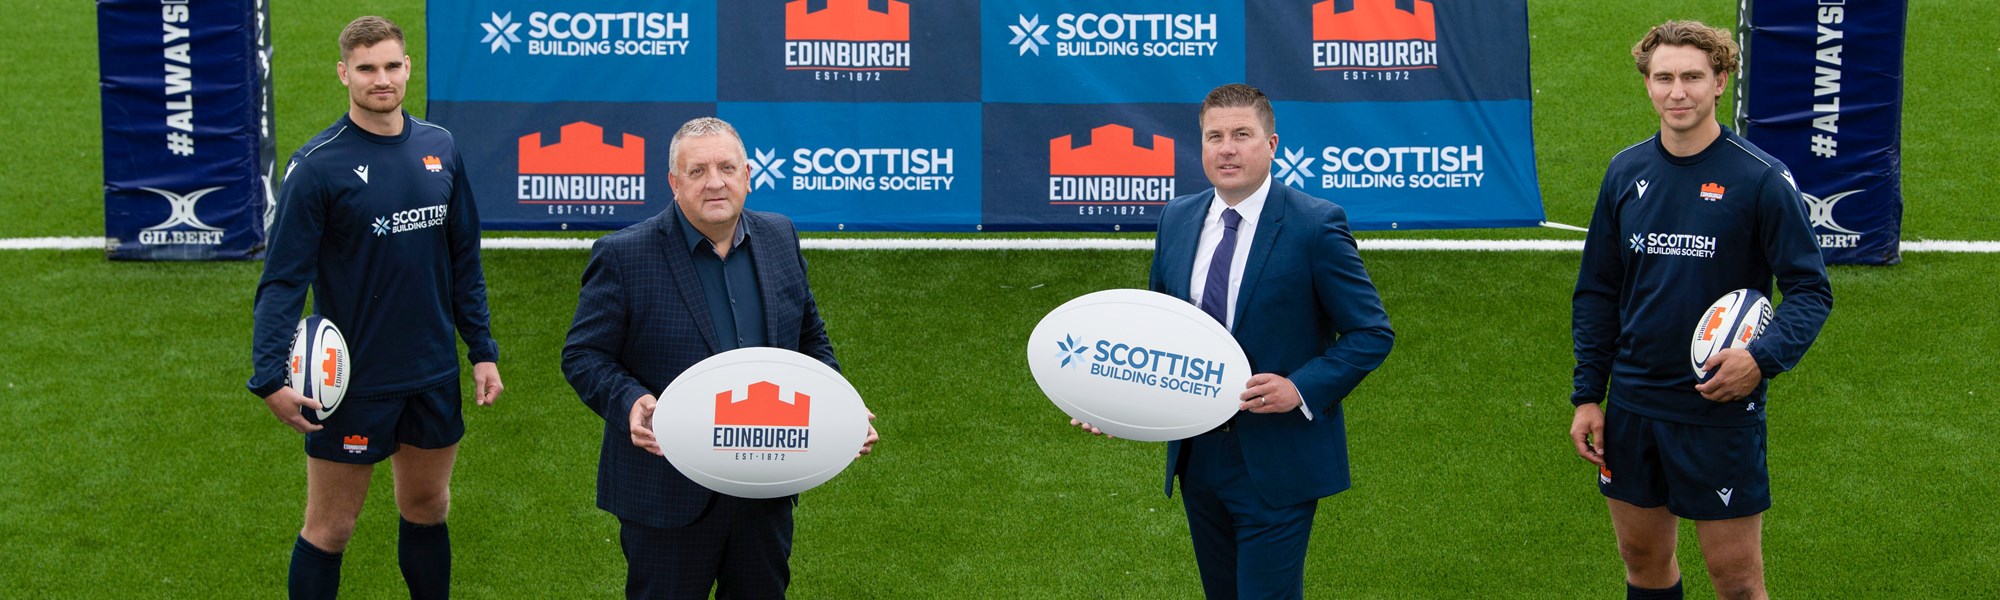 Background image: Scottish Building Society backs Edinburgh Rugby